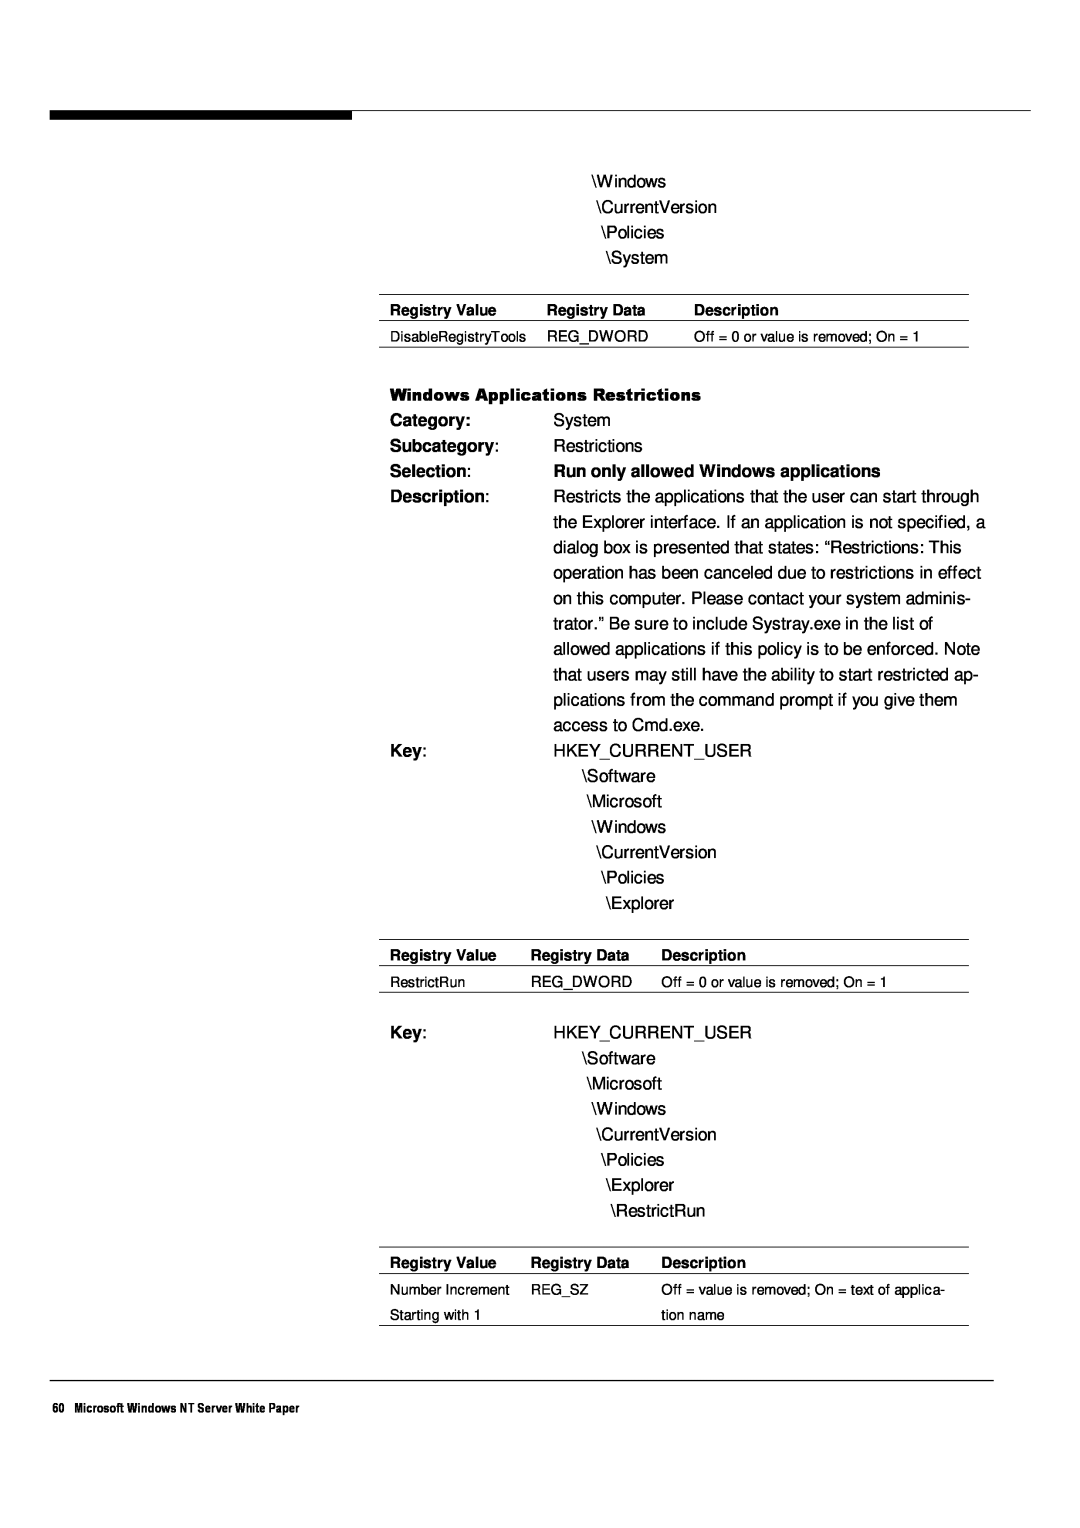 Microsoft Windows NT 4.0 manual Windows Applications Restrictions, Microsoft Windows NT Server White Paper 